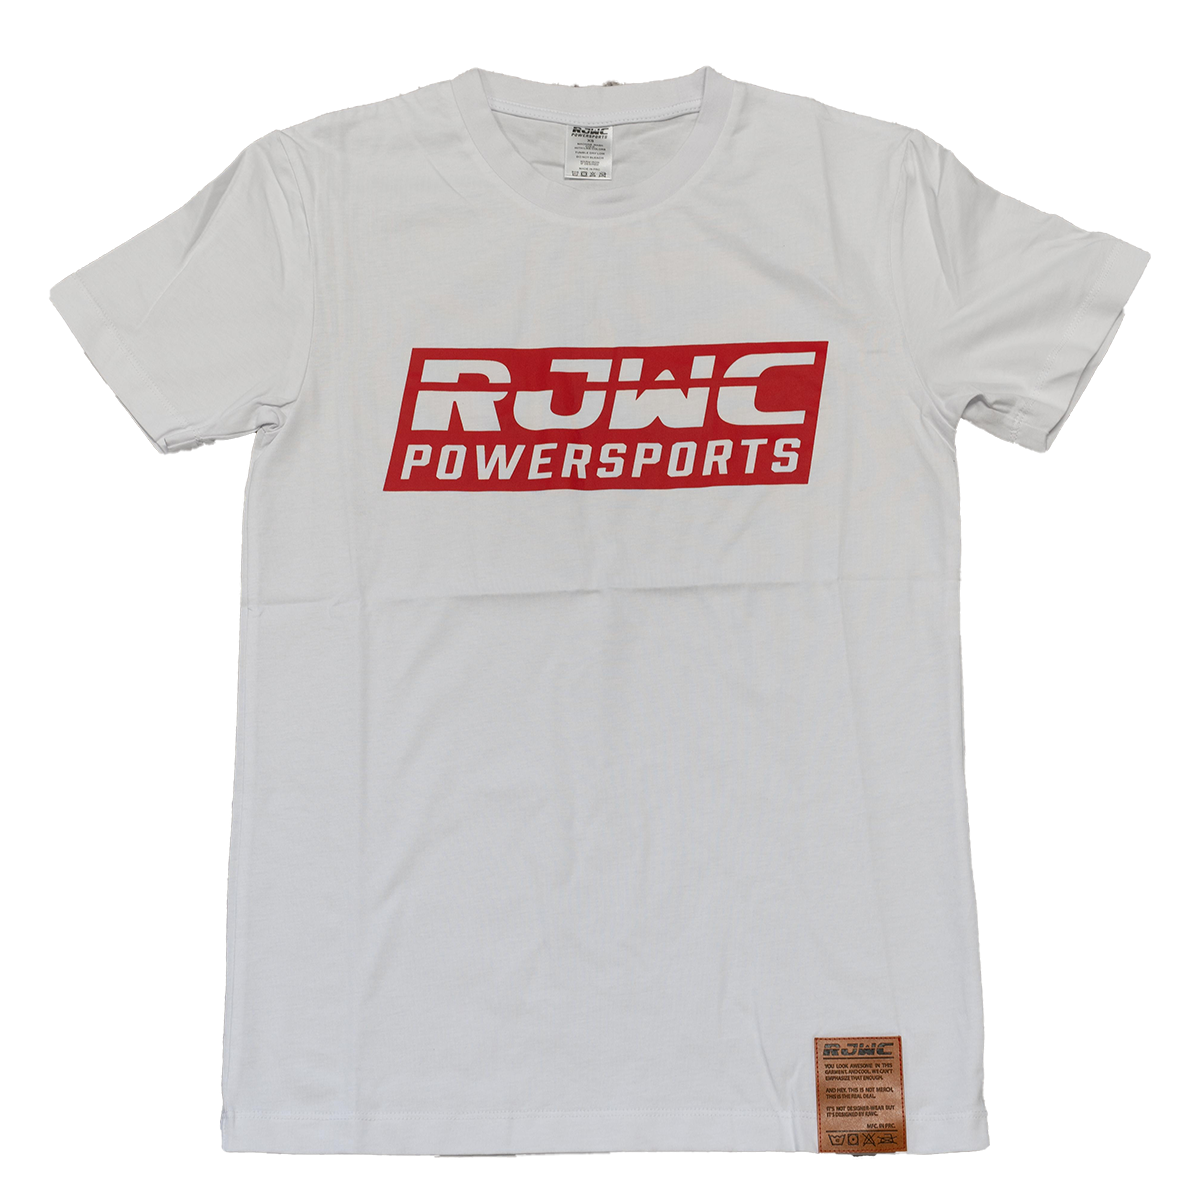 RJWC Powersports White T-Shirt Male